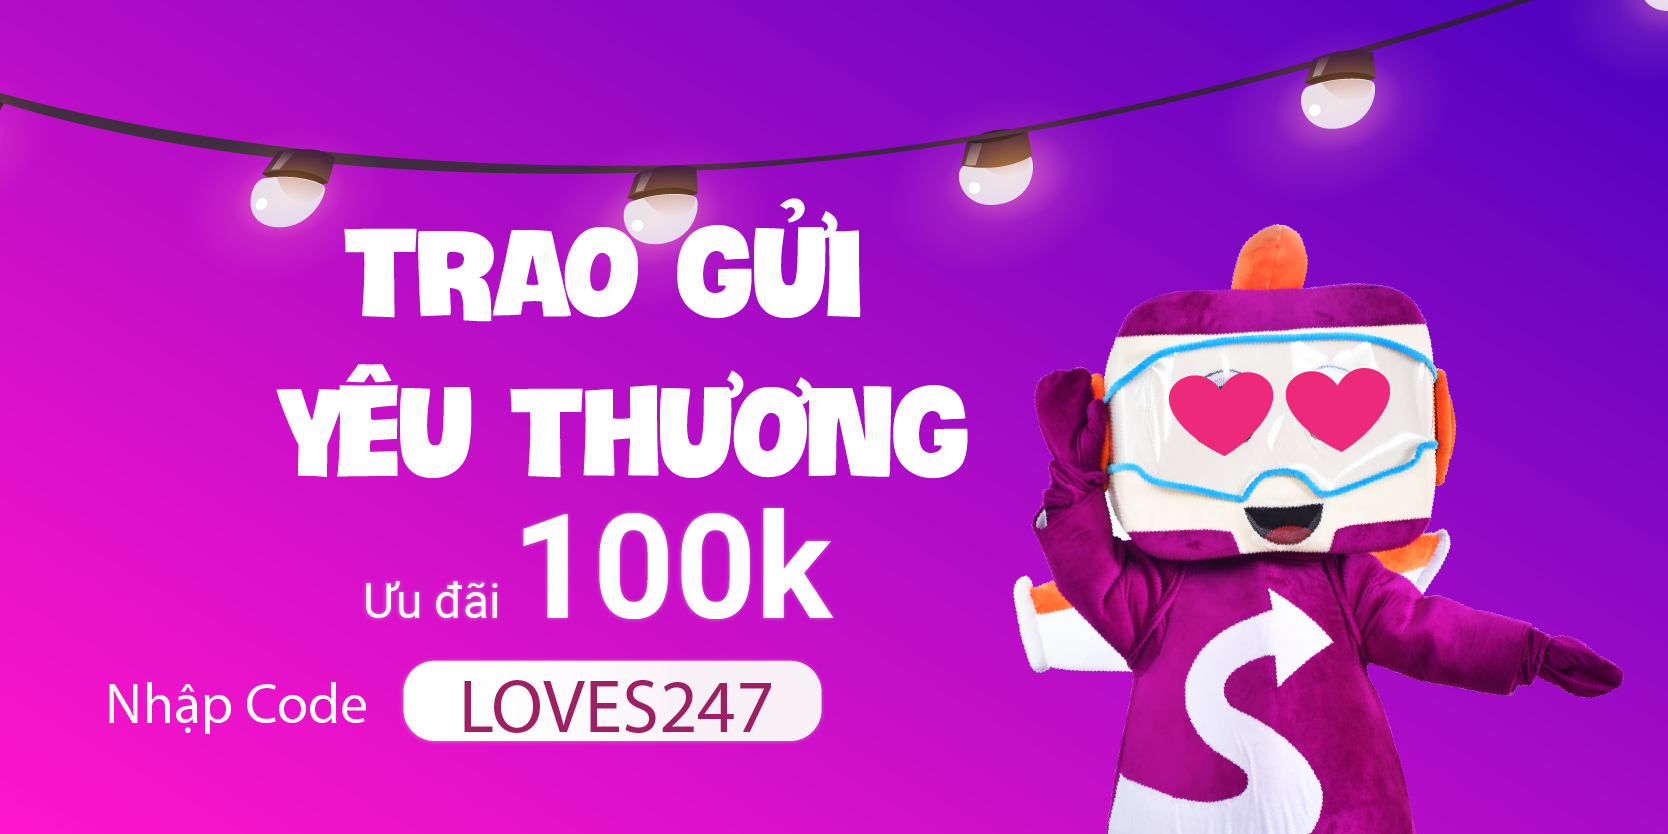 loves247-trao-gui-yeu-thuong